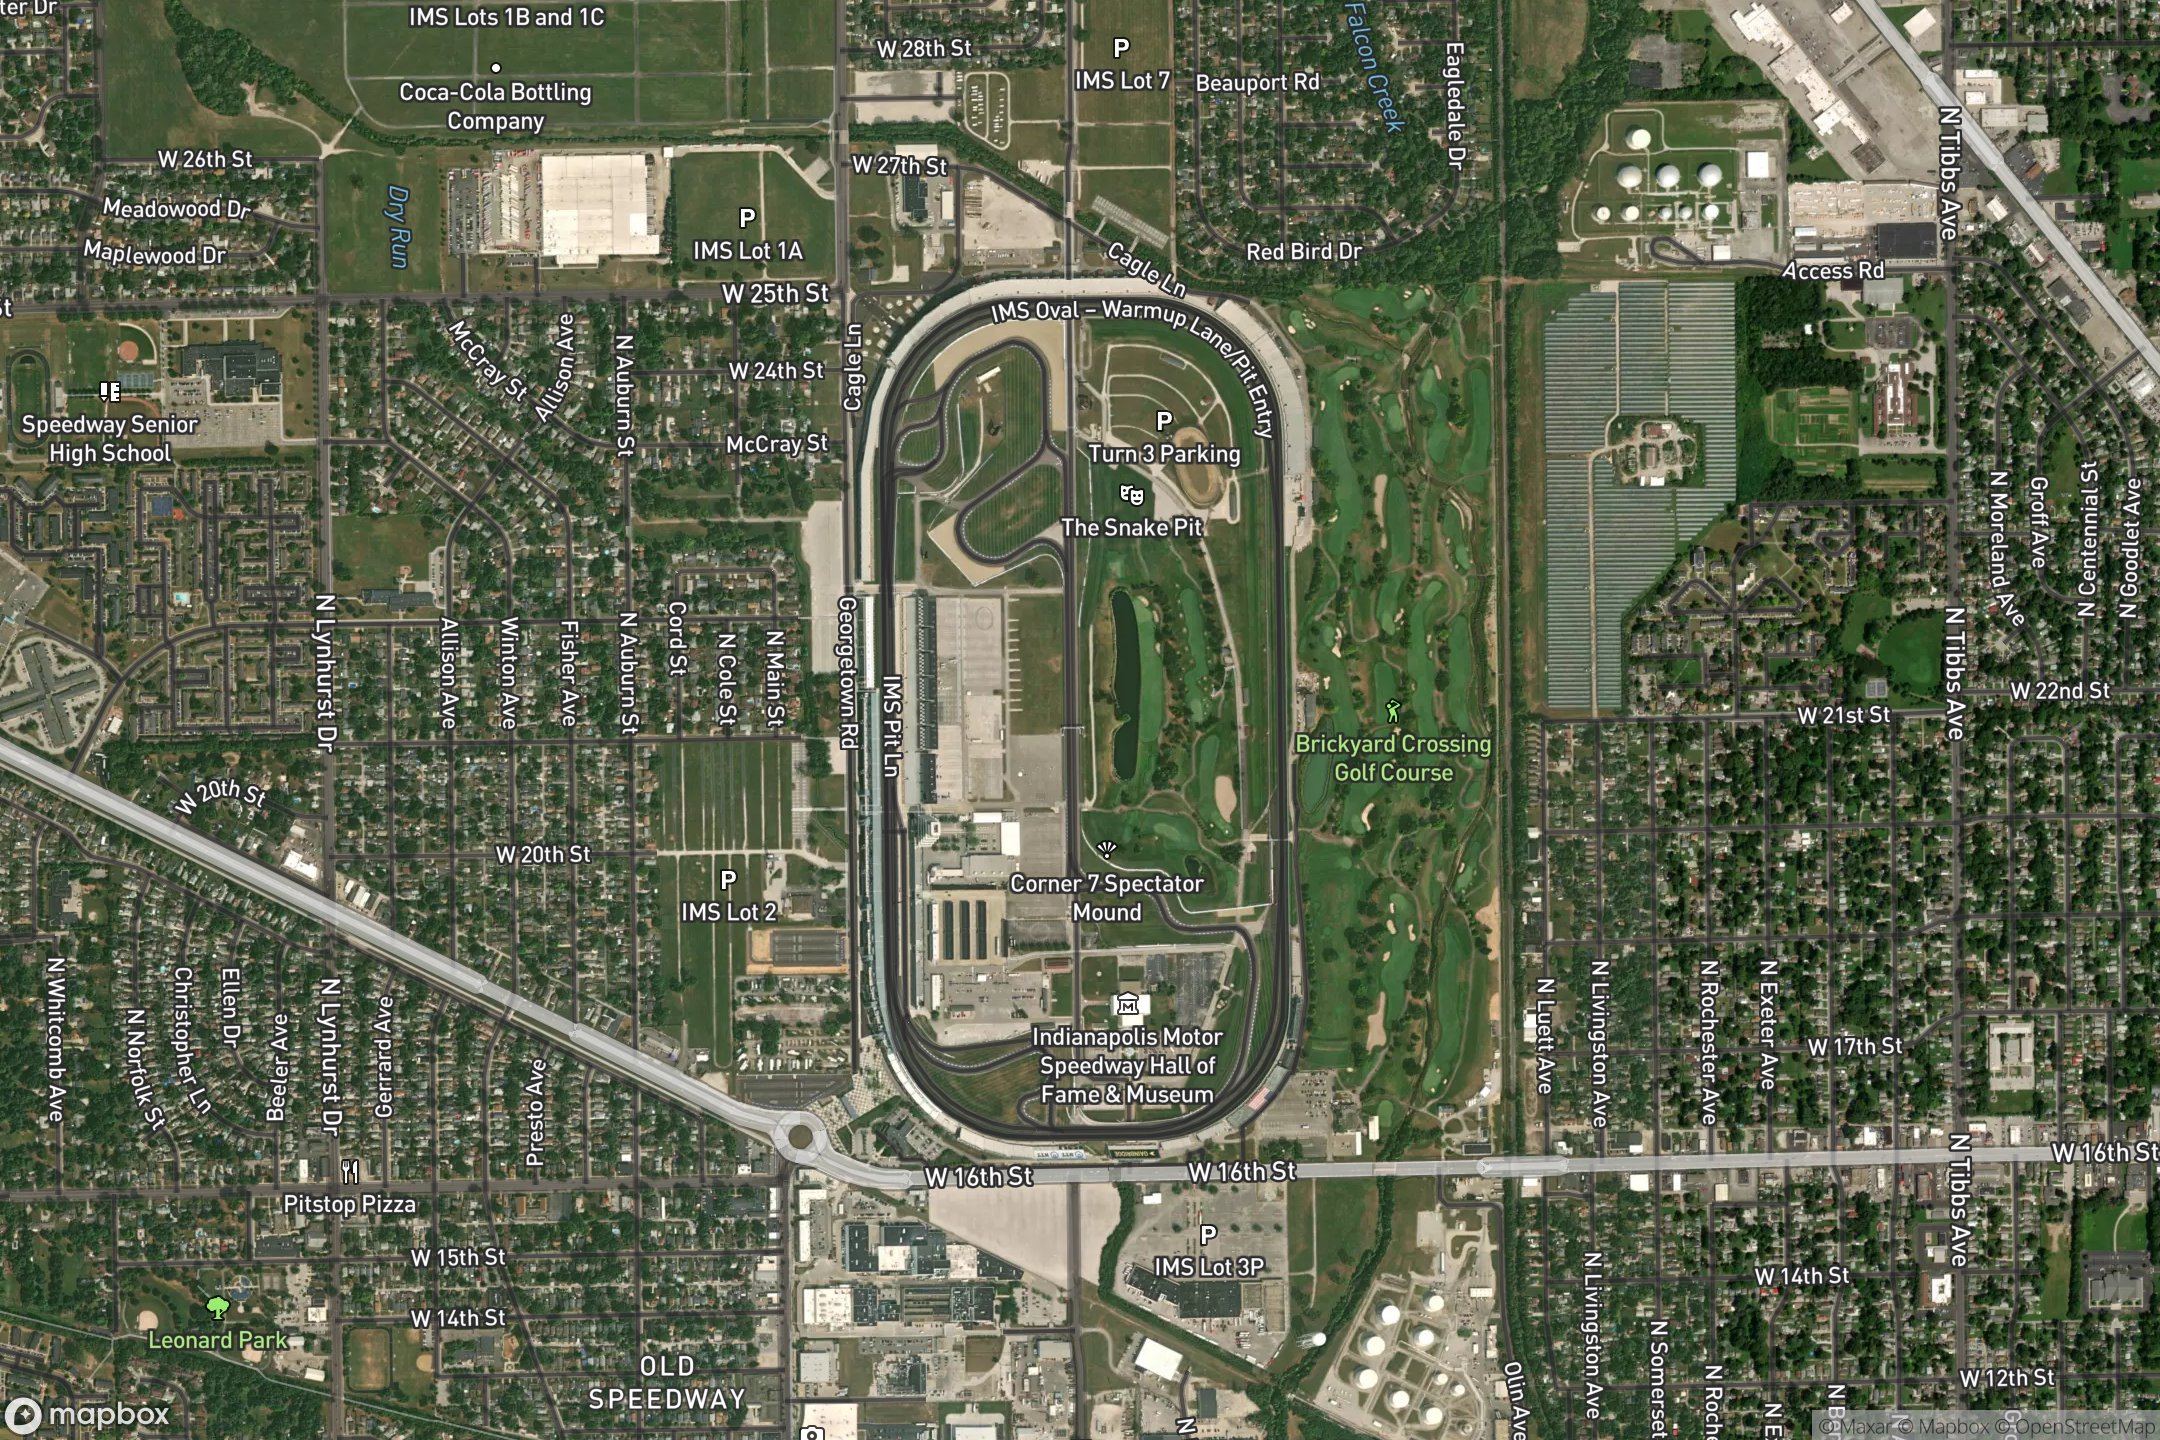 Vue satellite du circuit Indianapolis Motor Speedway